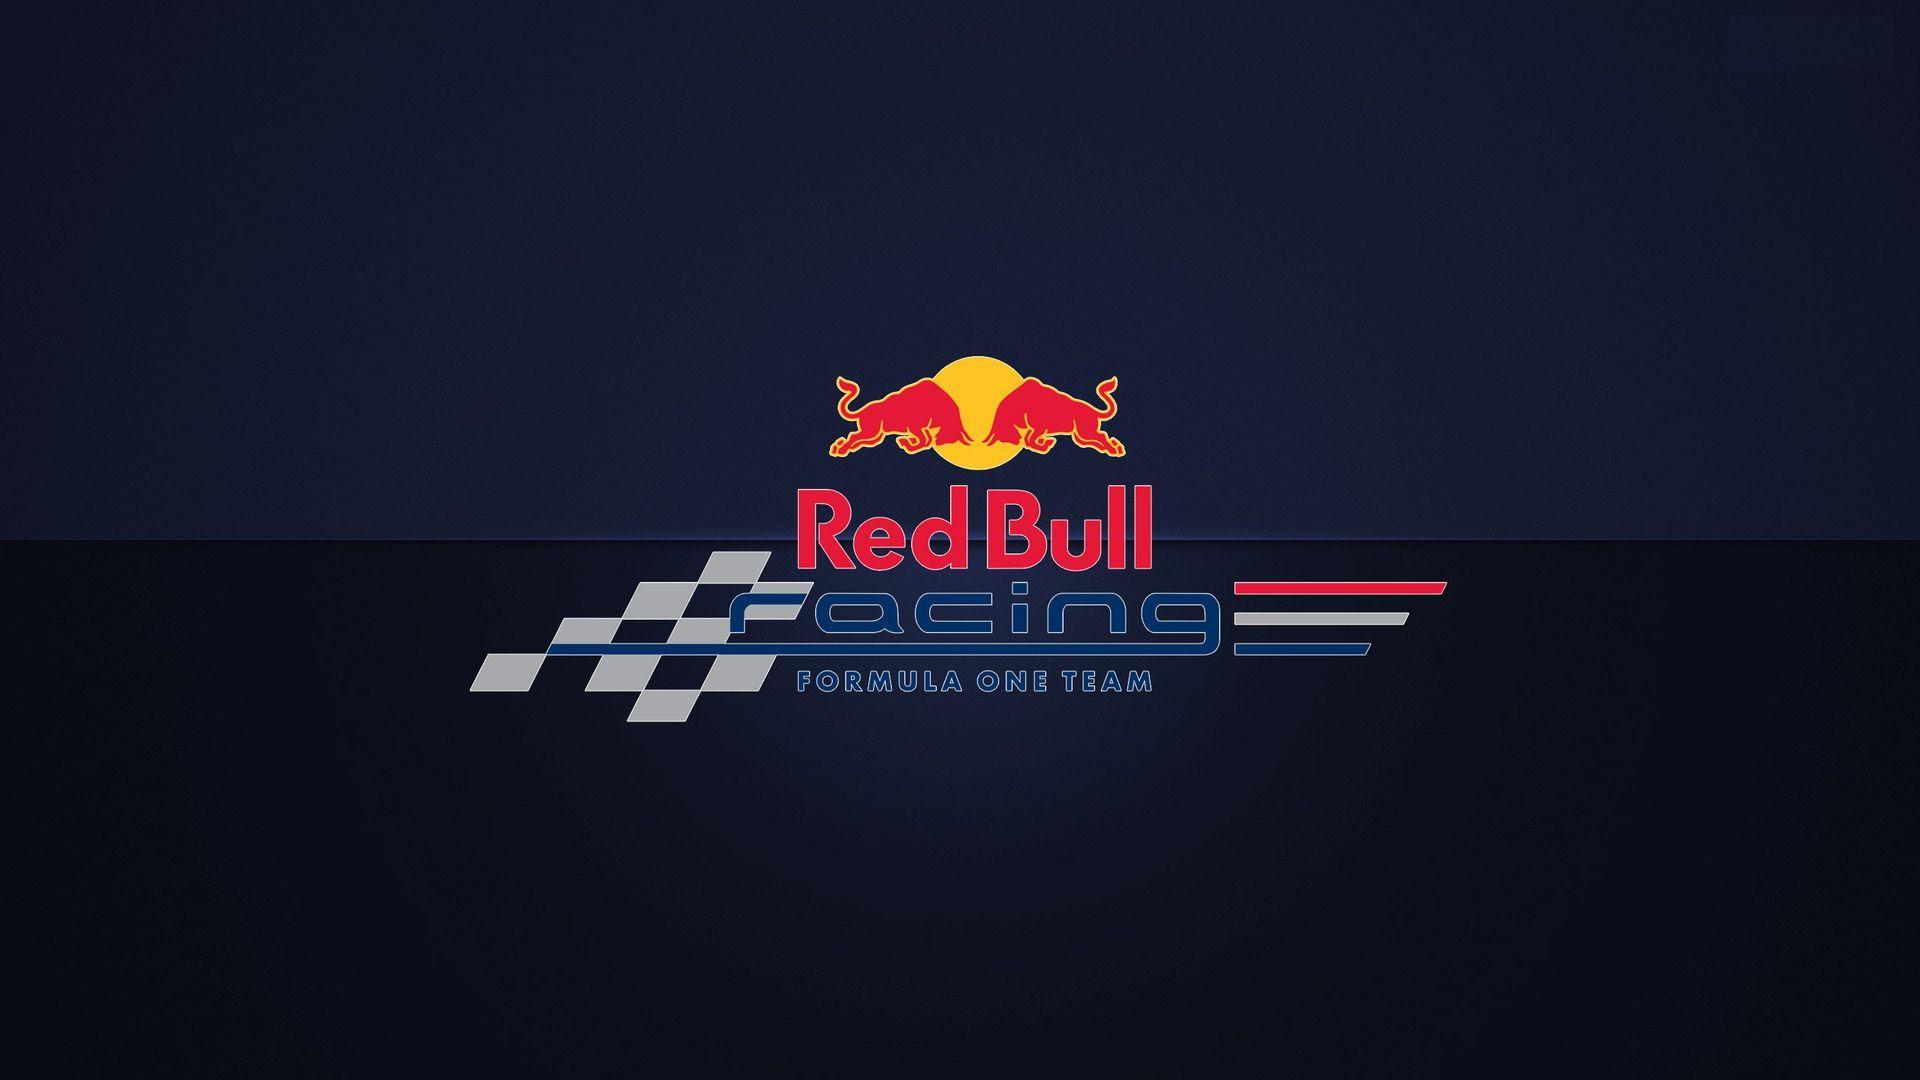 Wallpaper.wiki Red Bull Logo HD Background PIC WPD005157. Wallpaper